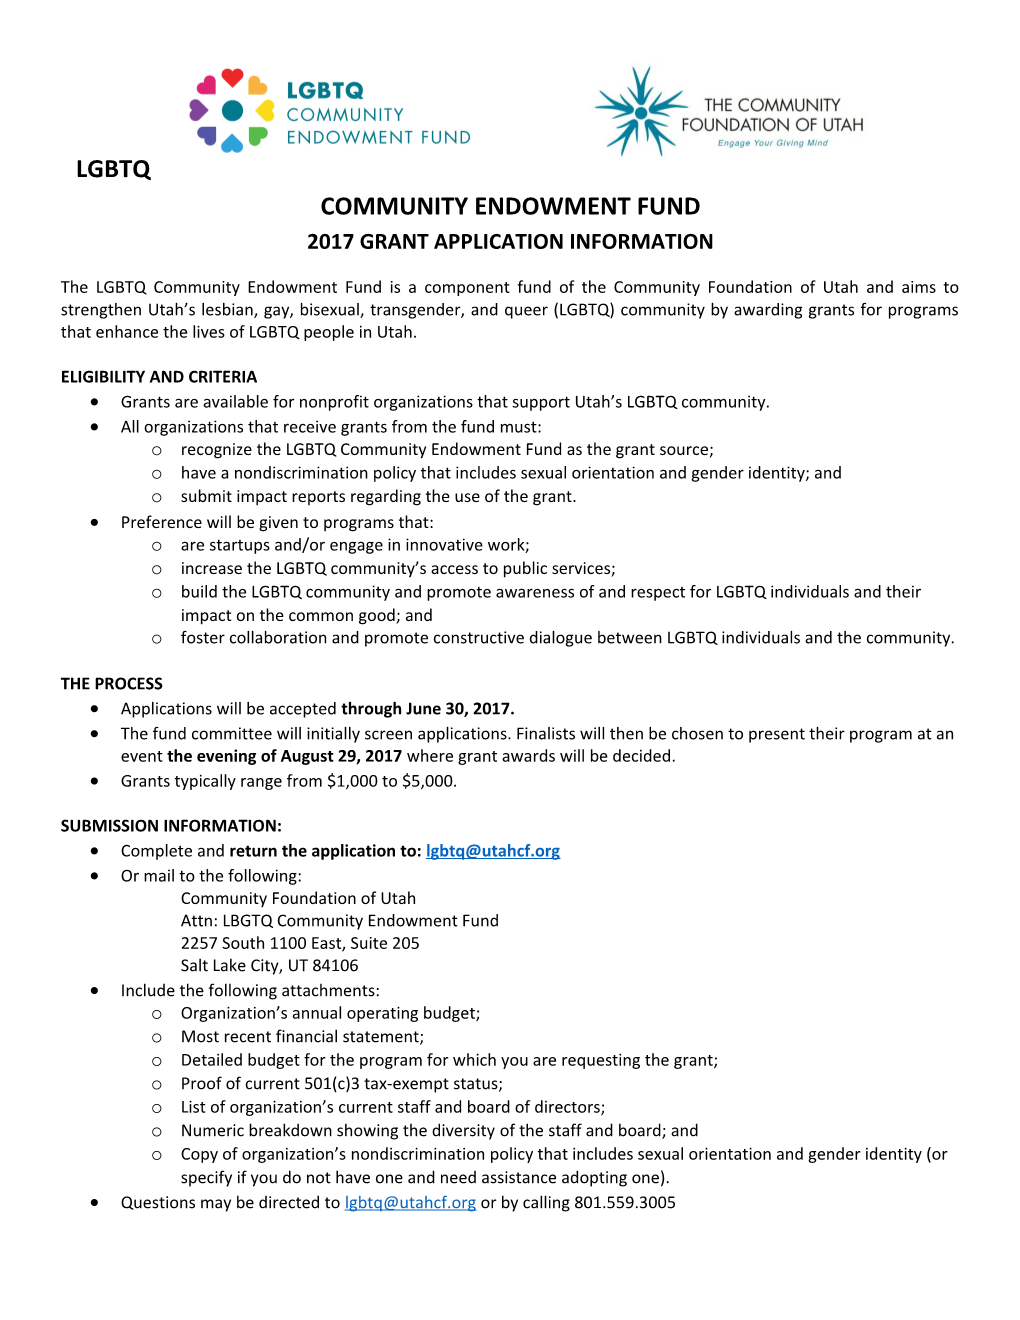 LGBTQ Community Endowment Fund